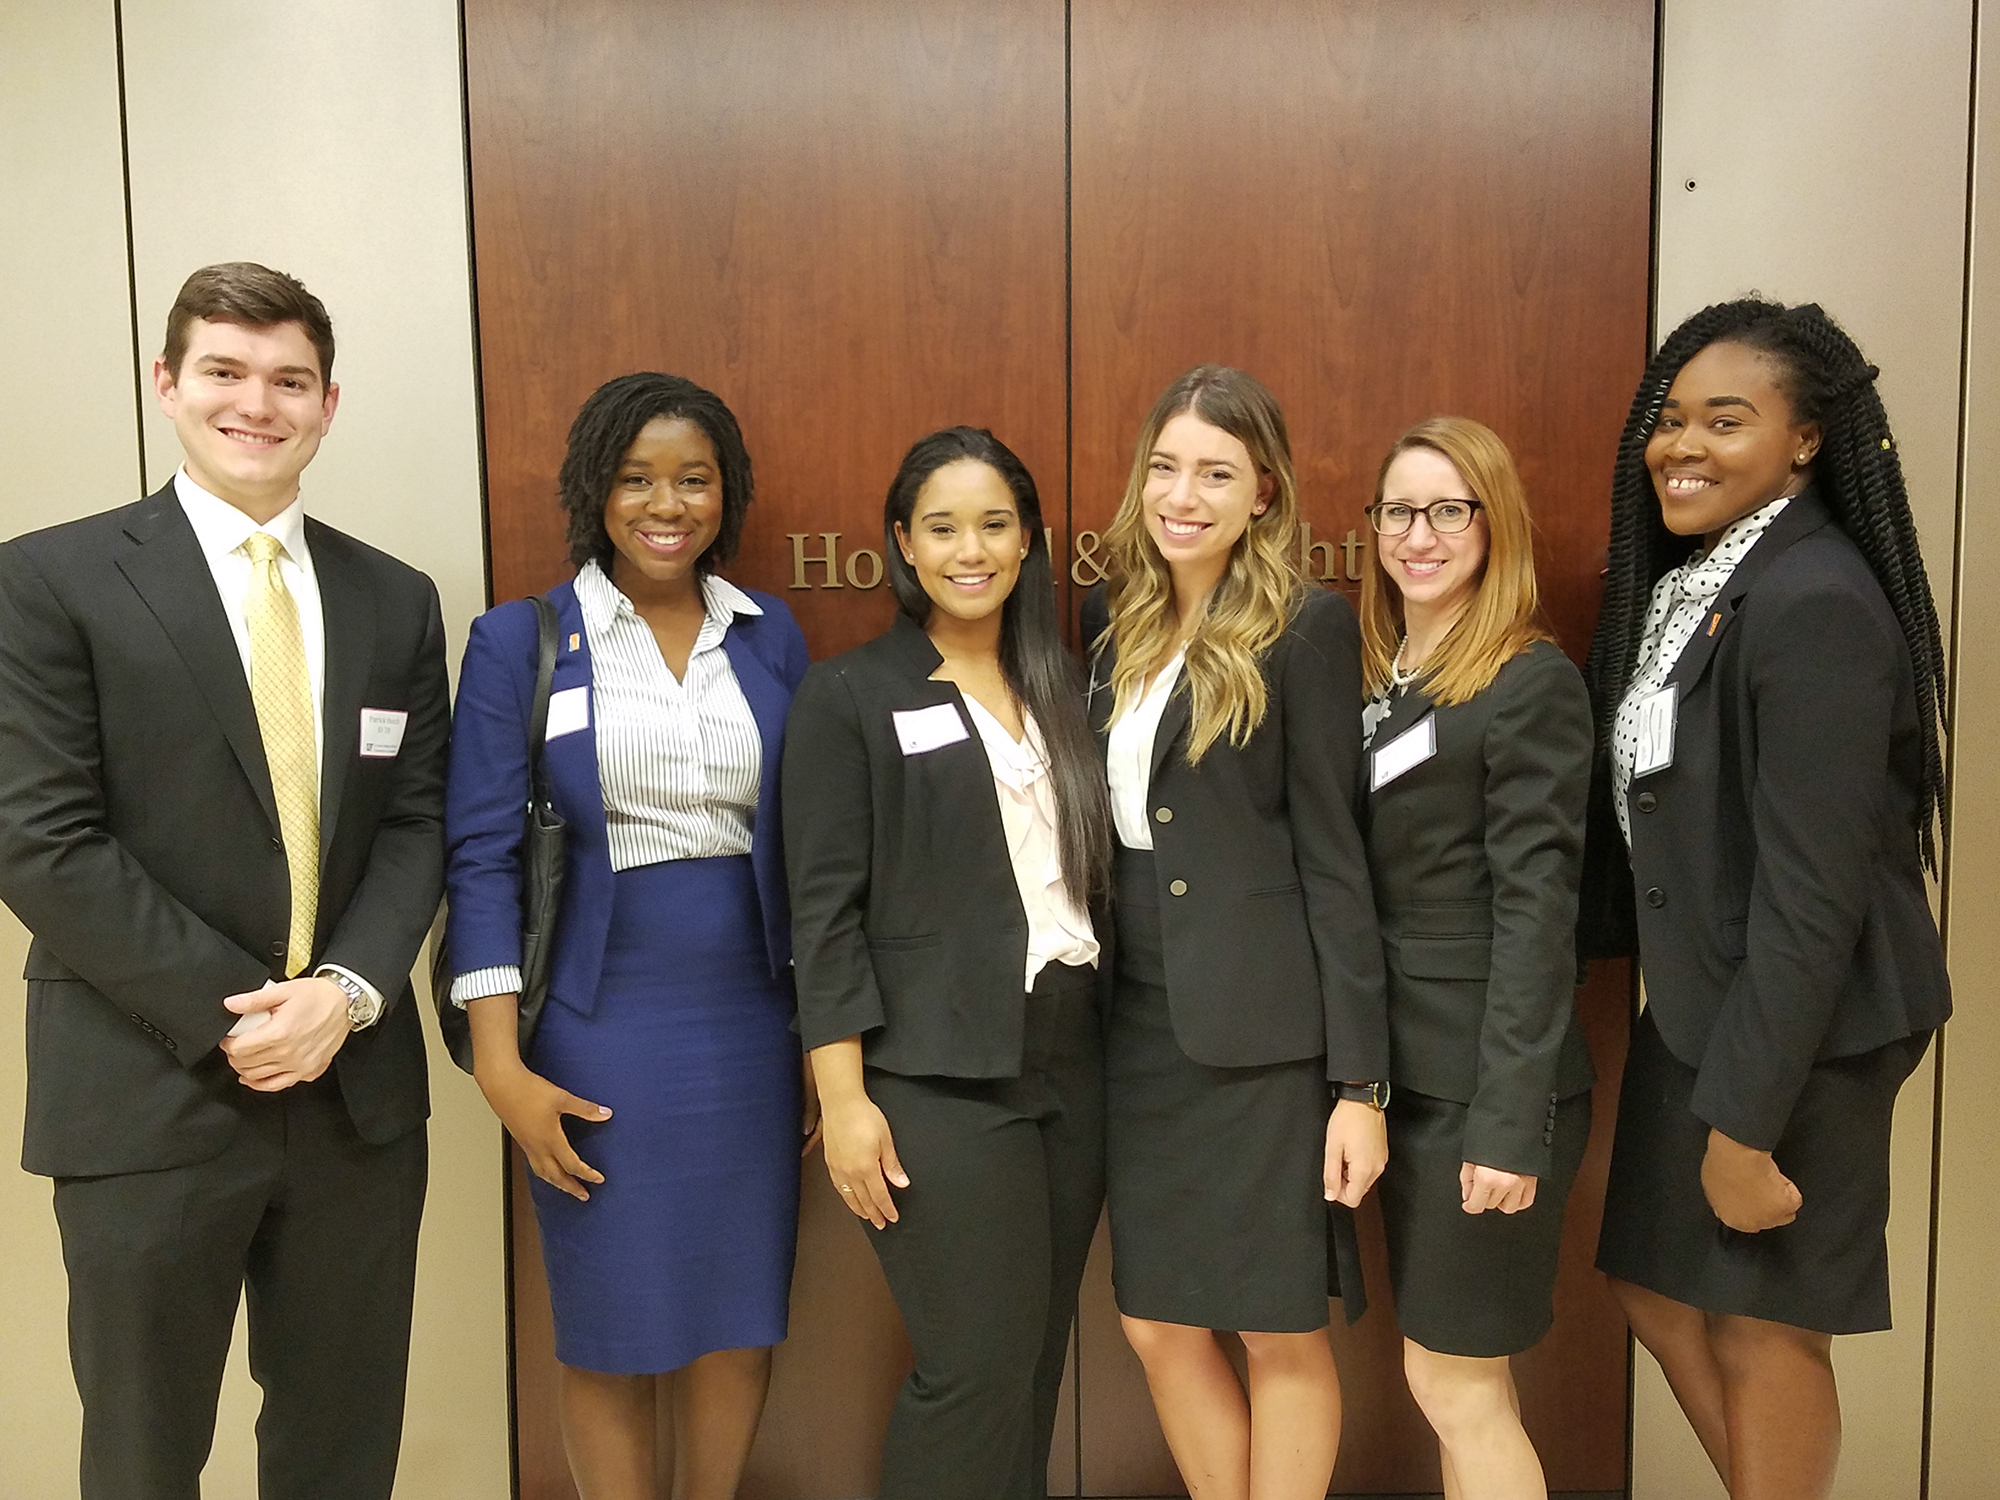 University of Florida law students from left, Patrick Hosch, Yolen Kamara, Jazmen Howard, Danielle Castellanos, Jessica Lefebvre and Richantae Johnson.